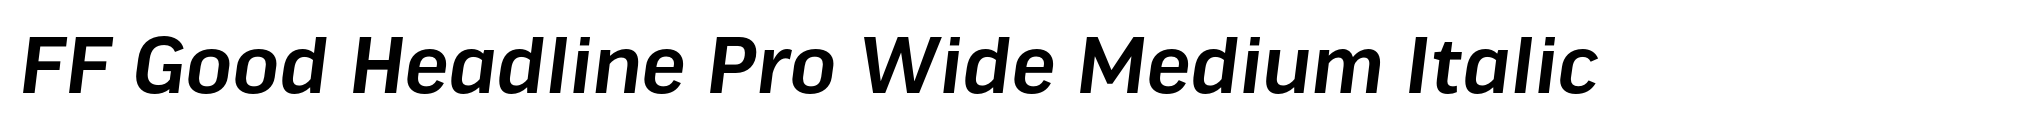 FF Good Headline Pro Wide Medium Italic image